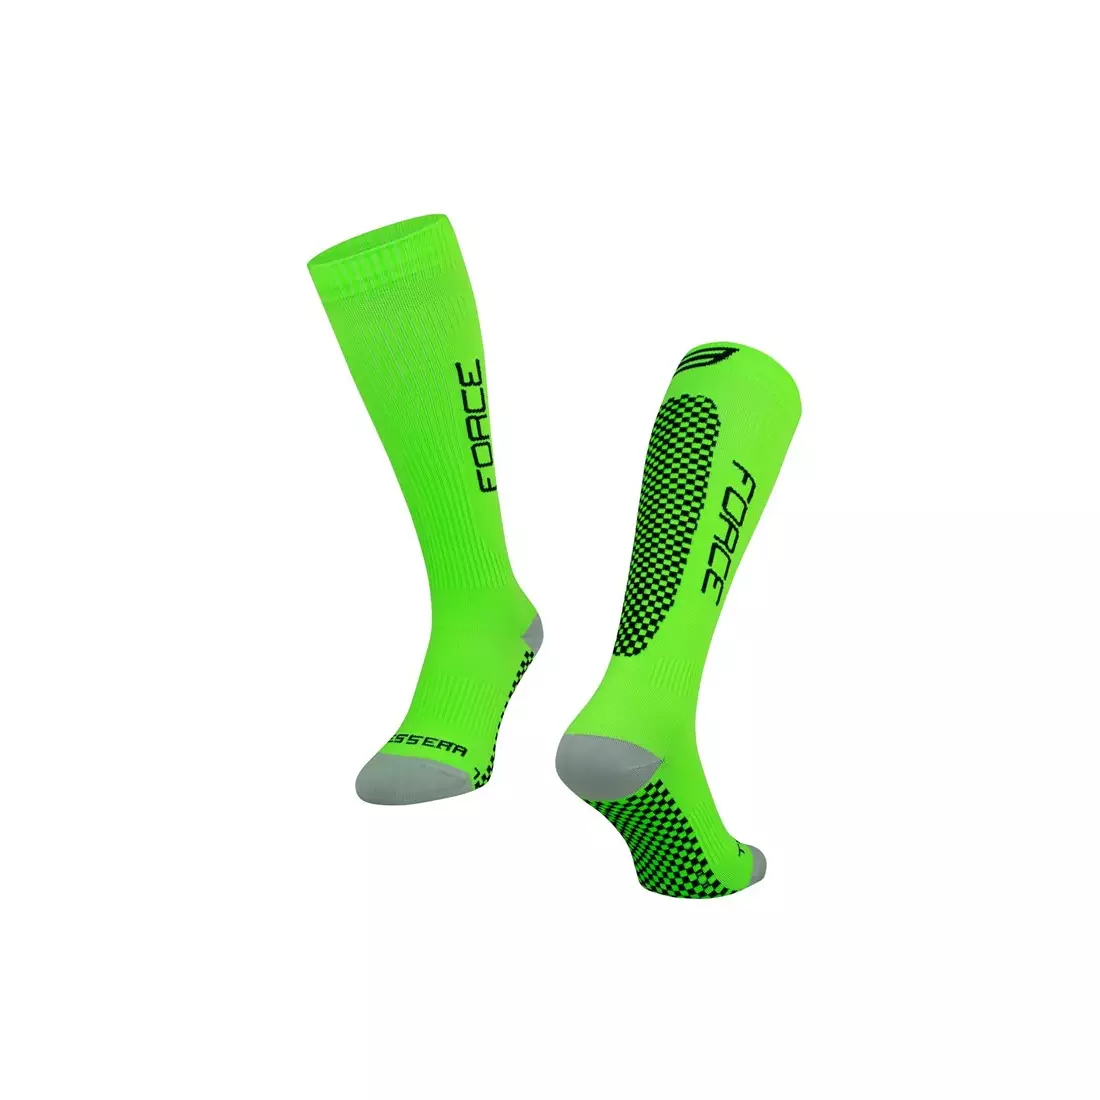 FORCE TESSERA COMPRESSION compression socks, green